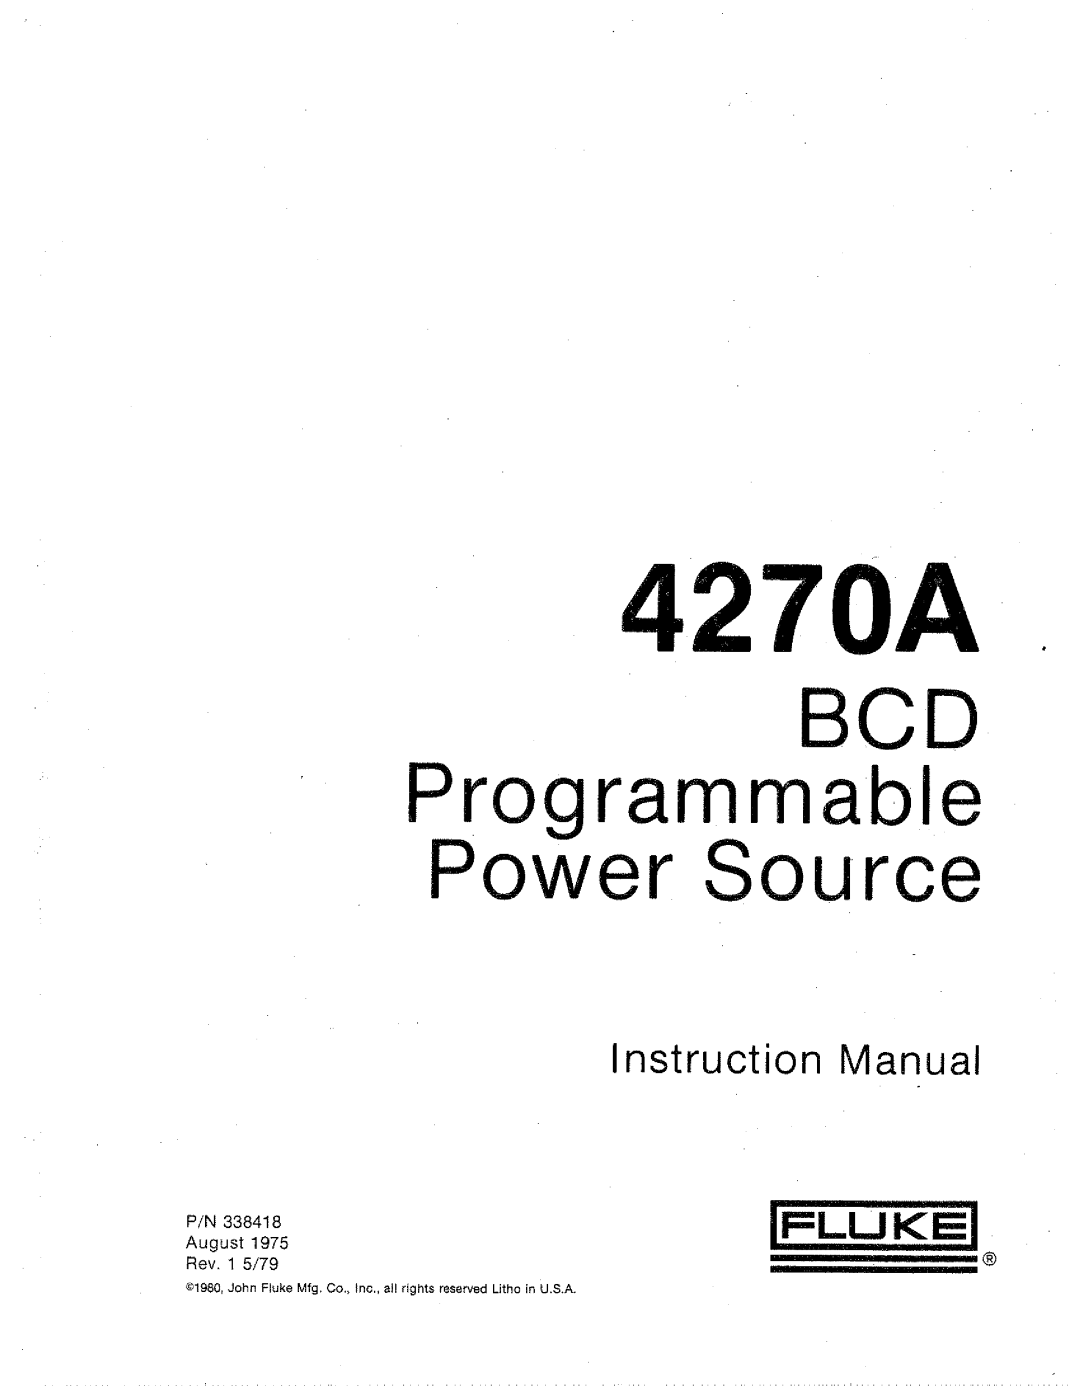 Fluke 4270A manual 